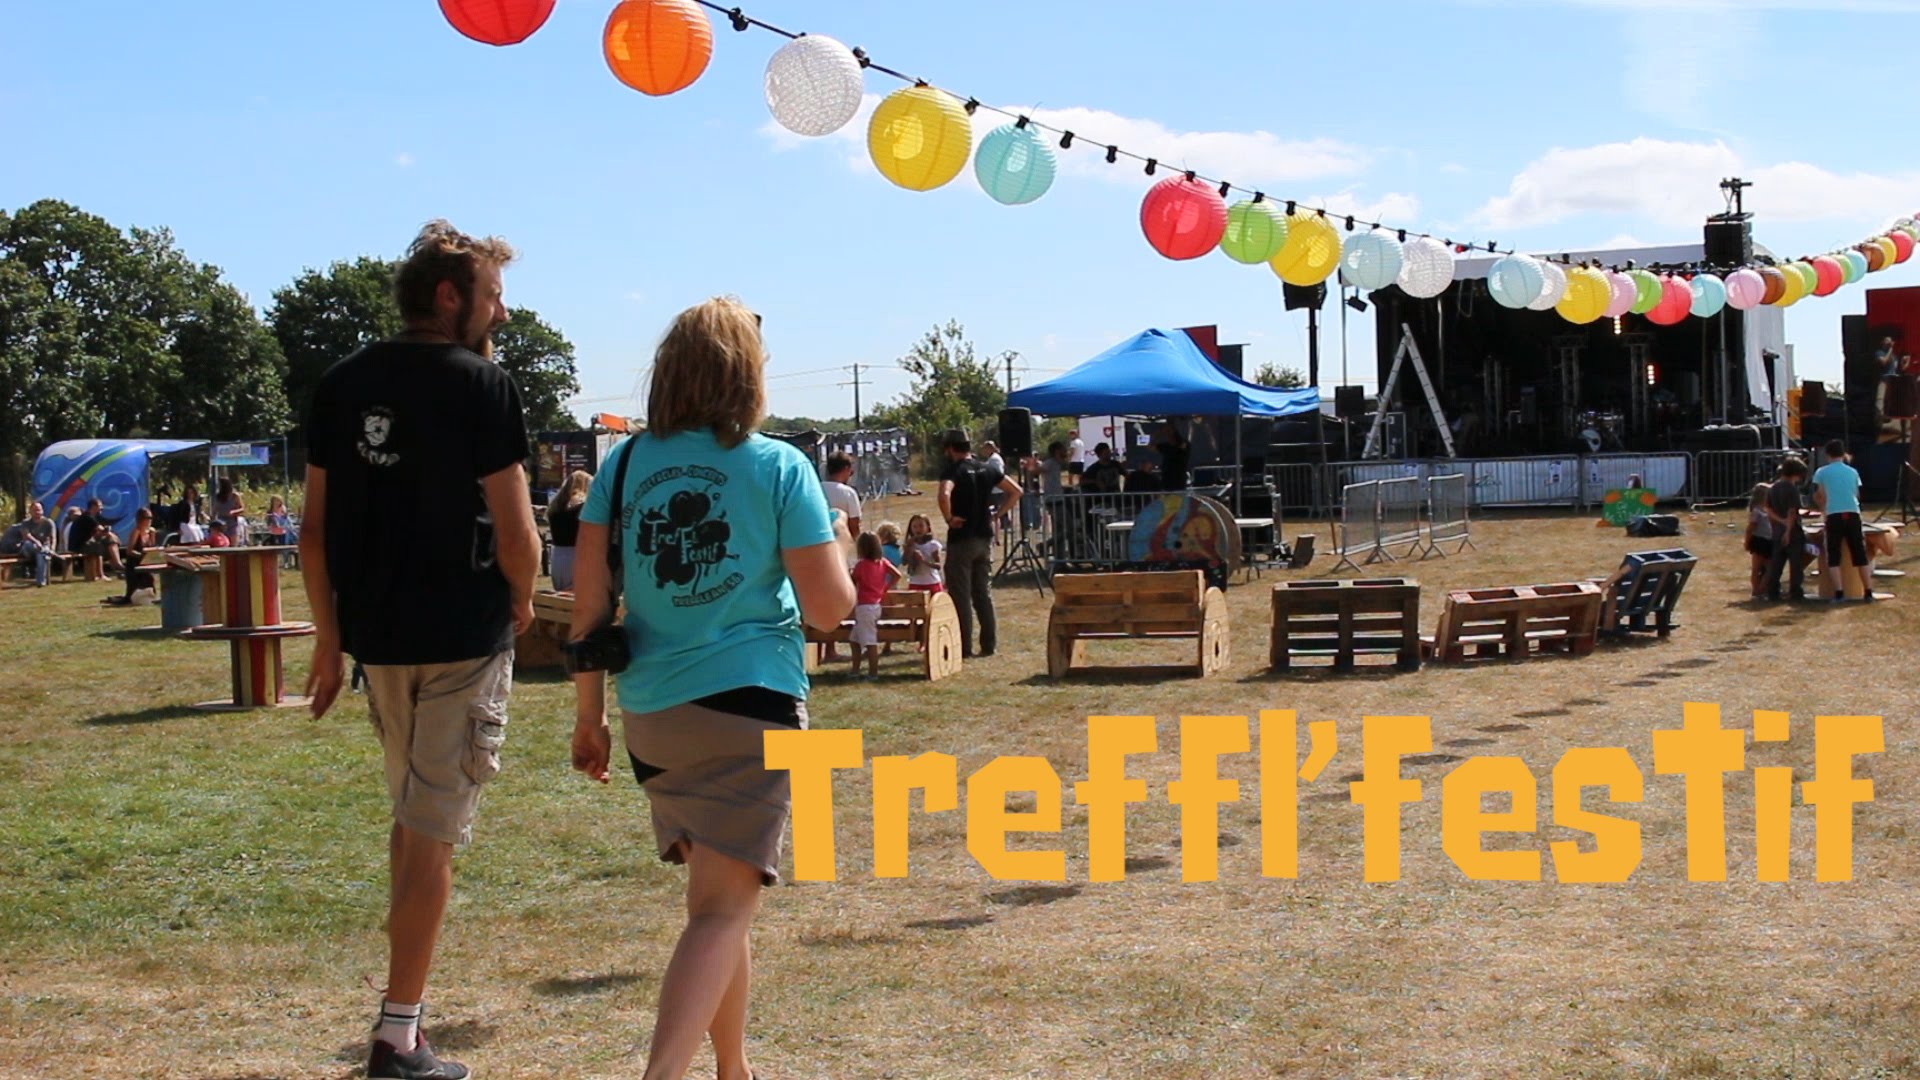 Festival Treffl'Festif #9